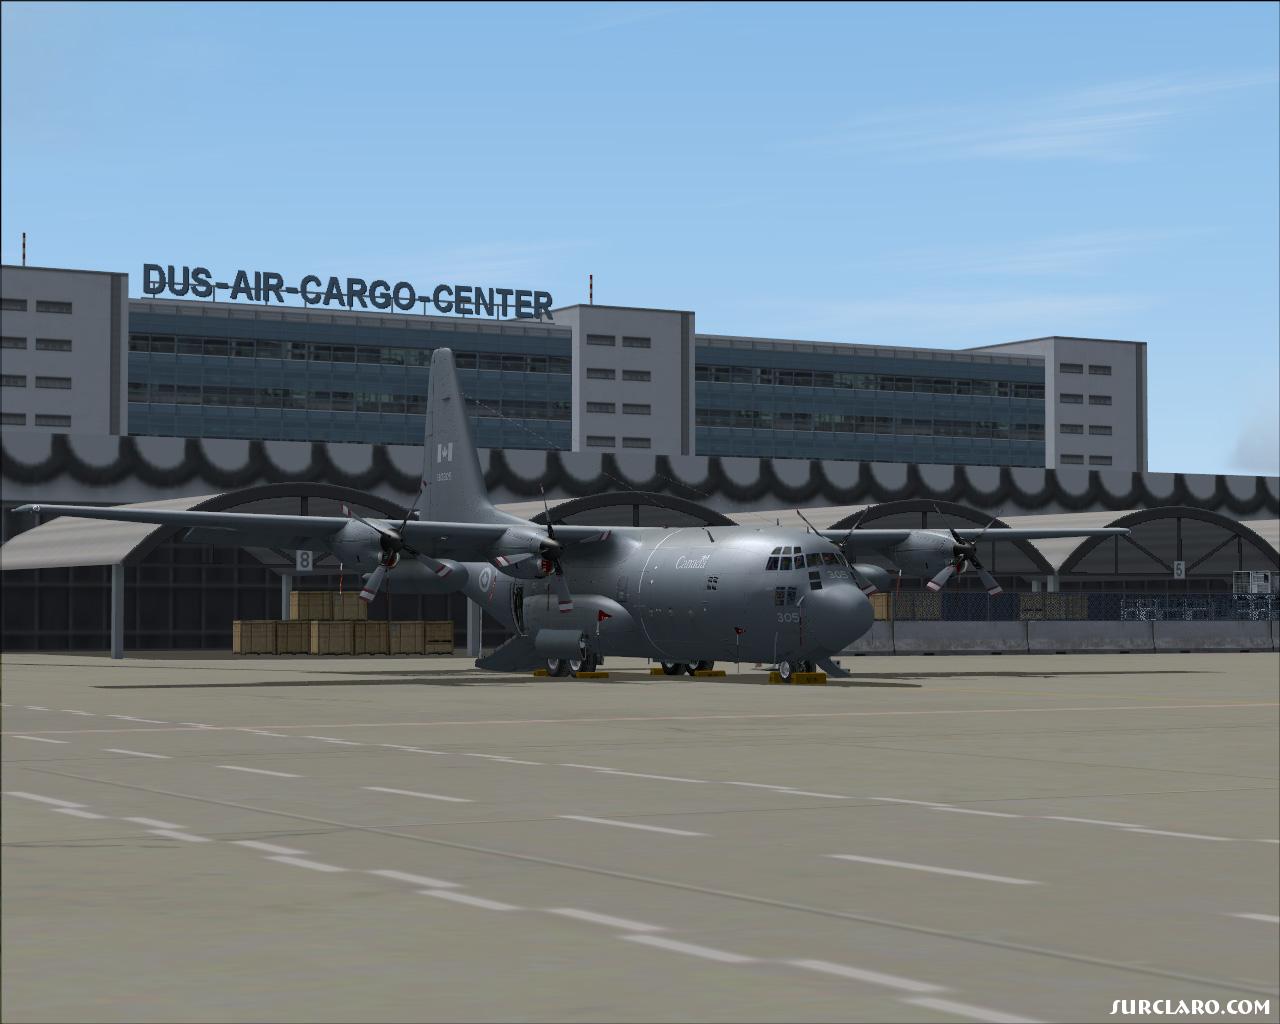 CAF-C-130 Hercules at Dusselldorf air Cargo center. - Photo 15304